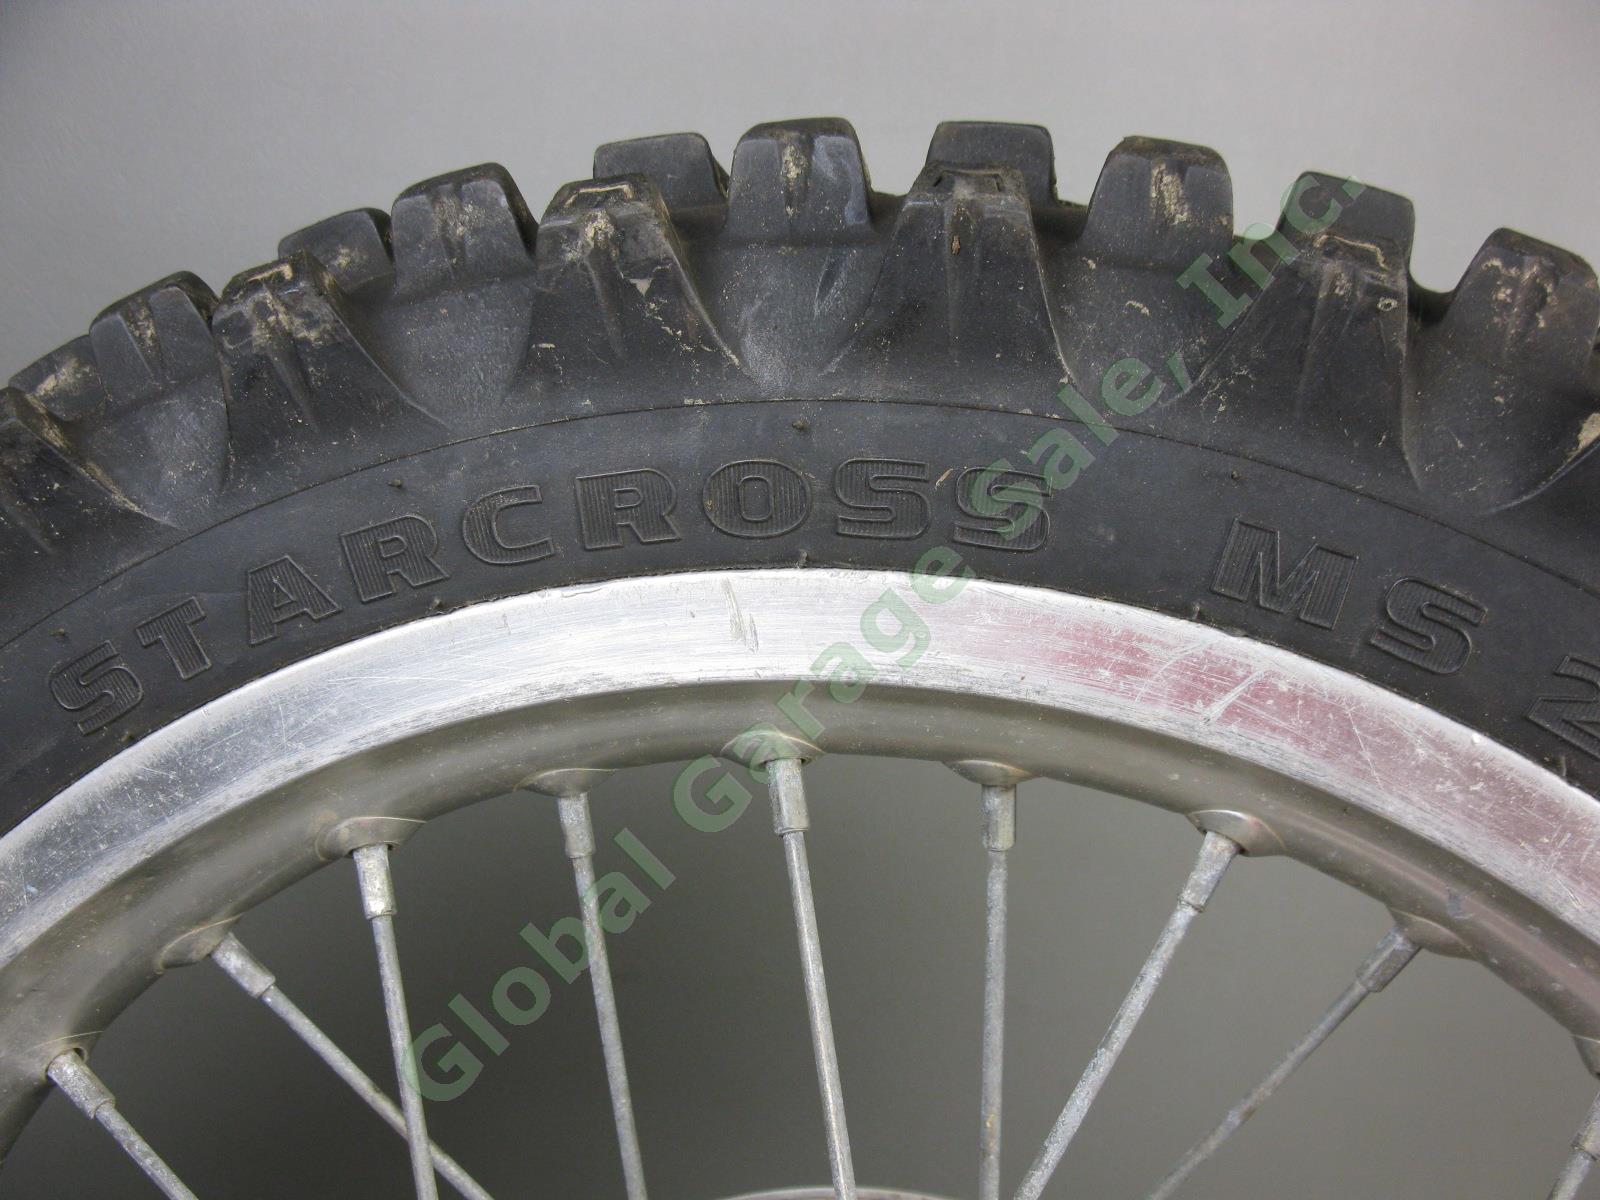 Talon Excel Takasago YZ85 16x1.85 Rear Wheel Rim Michelin Starcross 90/100 Tire 6